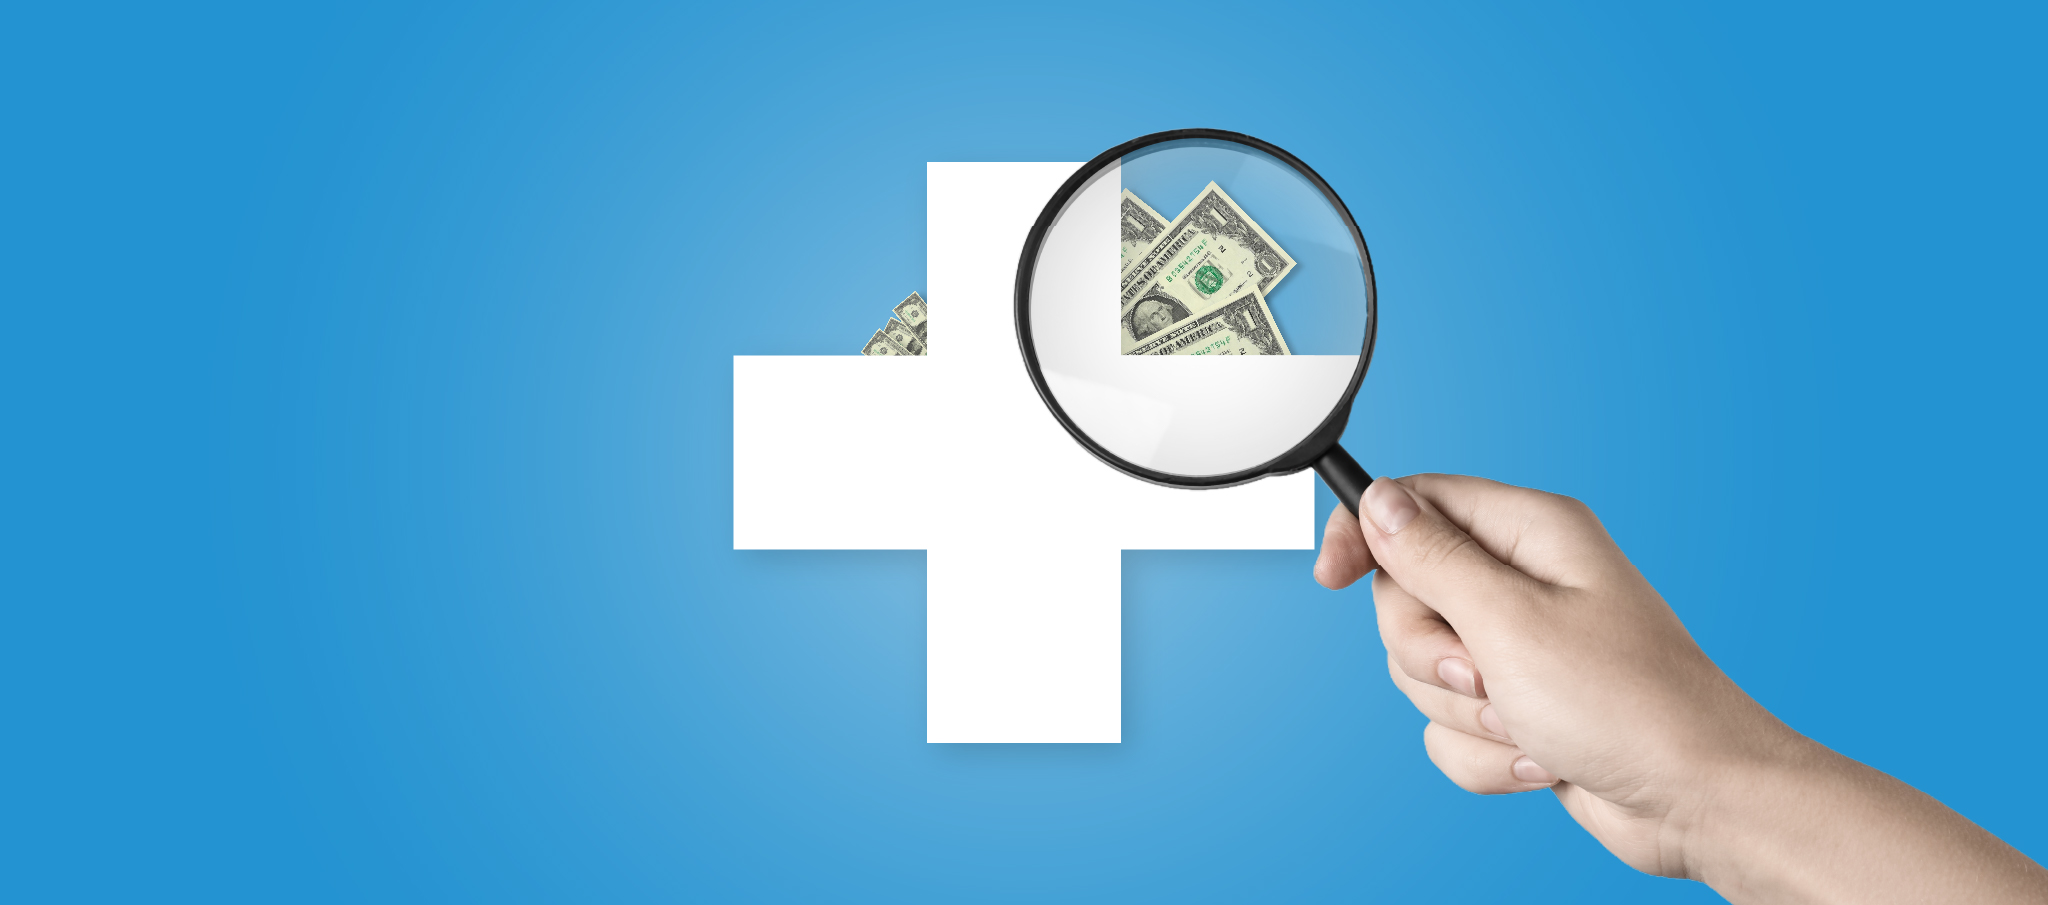 Building Healthcare Consumers’ Trust through Price Transparency